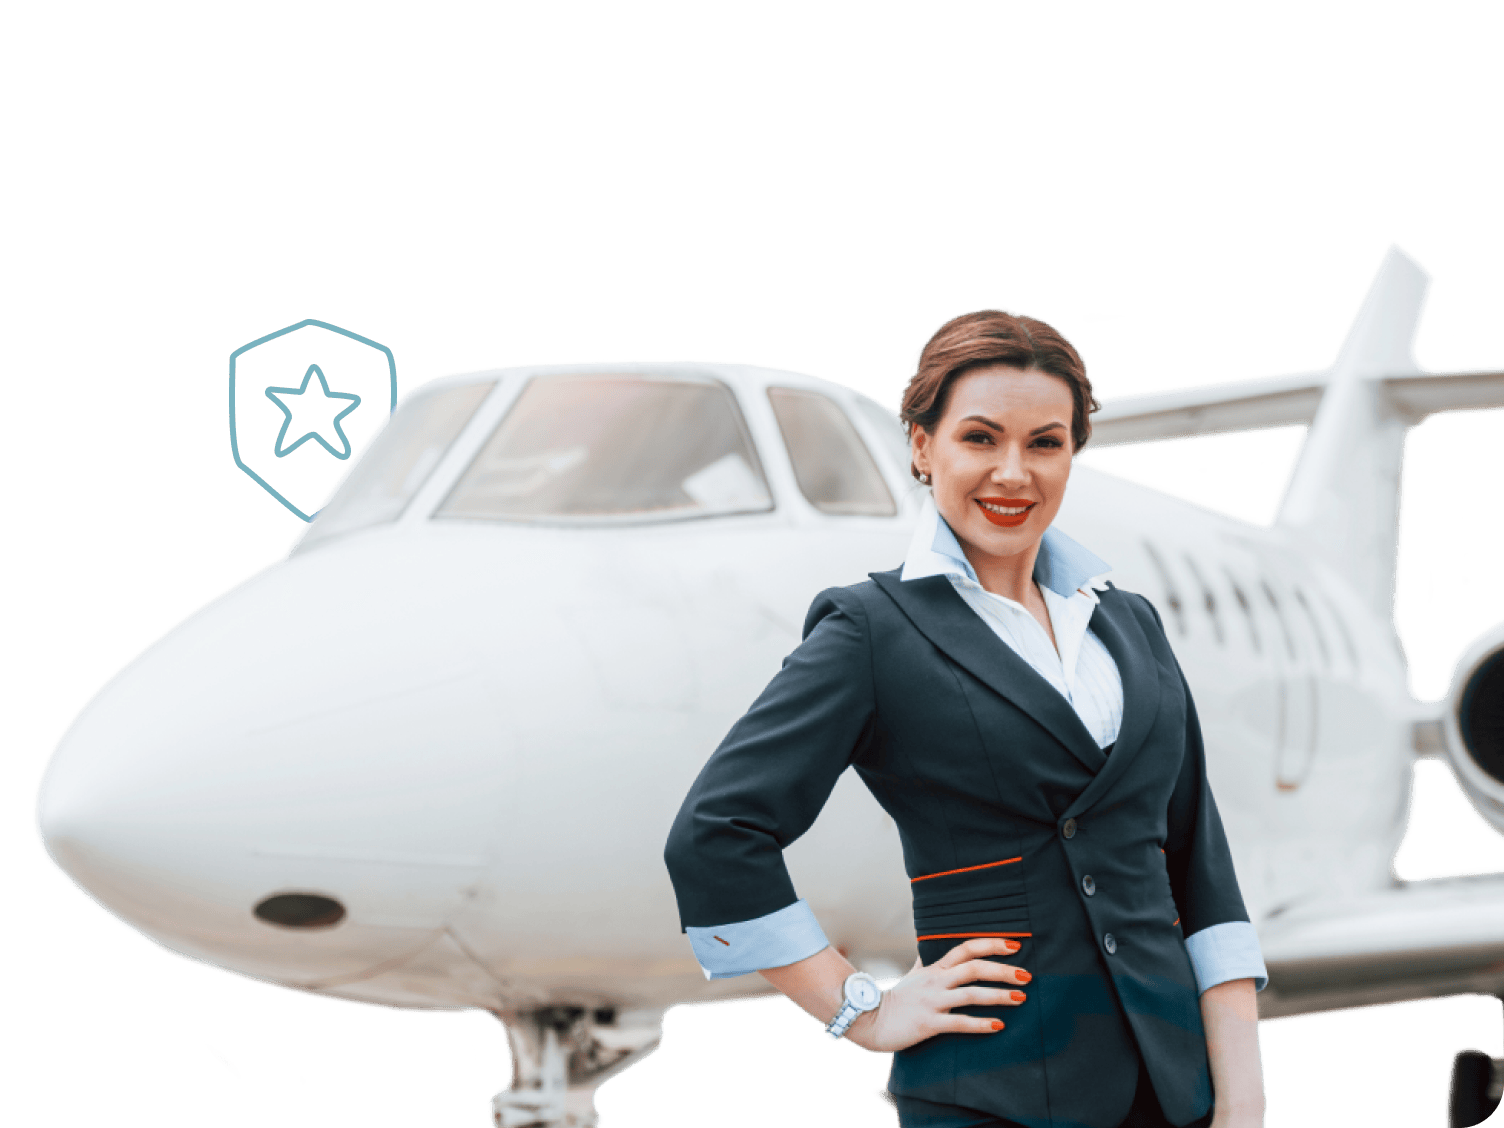 Страхование ответственности авиаперевозчика/авиаэксплуатанта